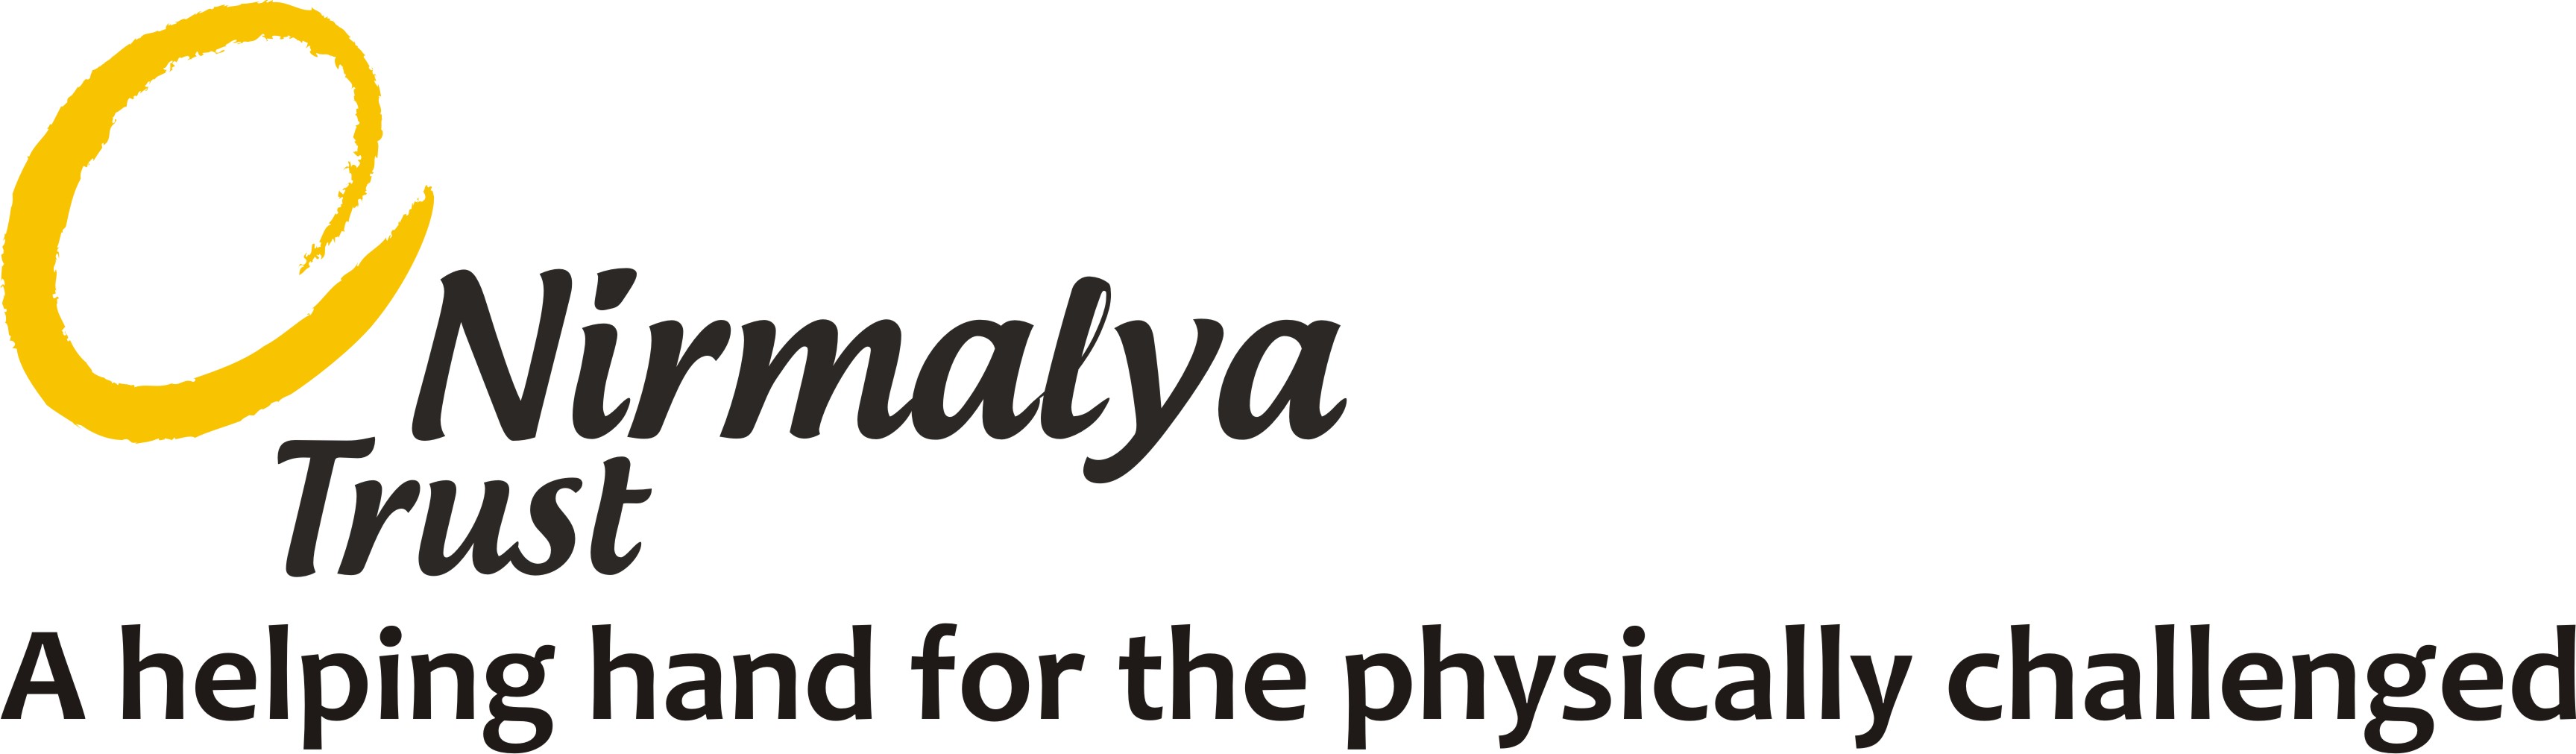 Nirmalya Trust logo